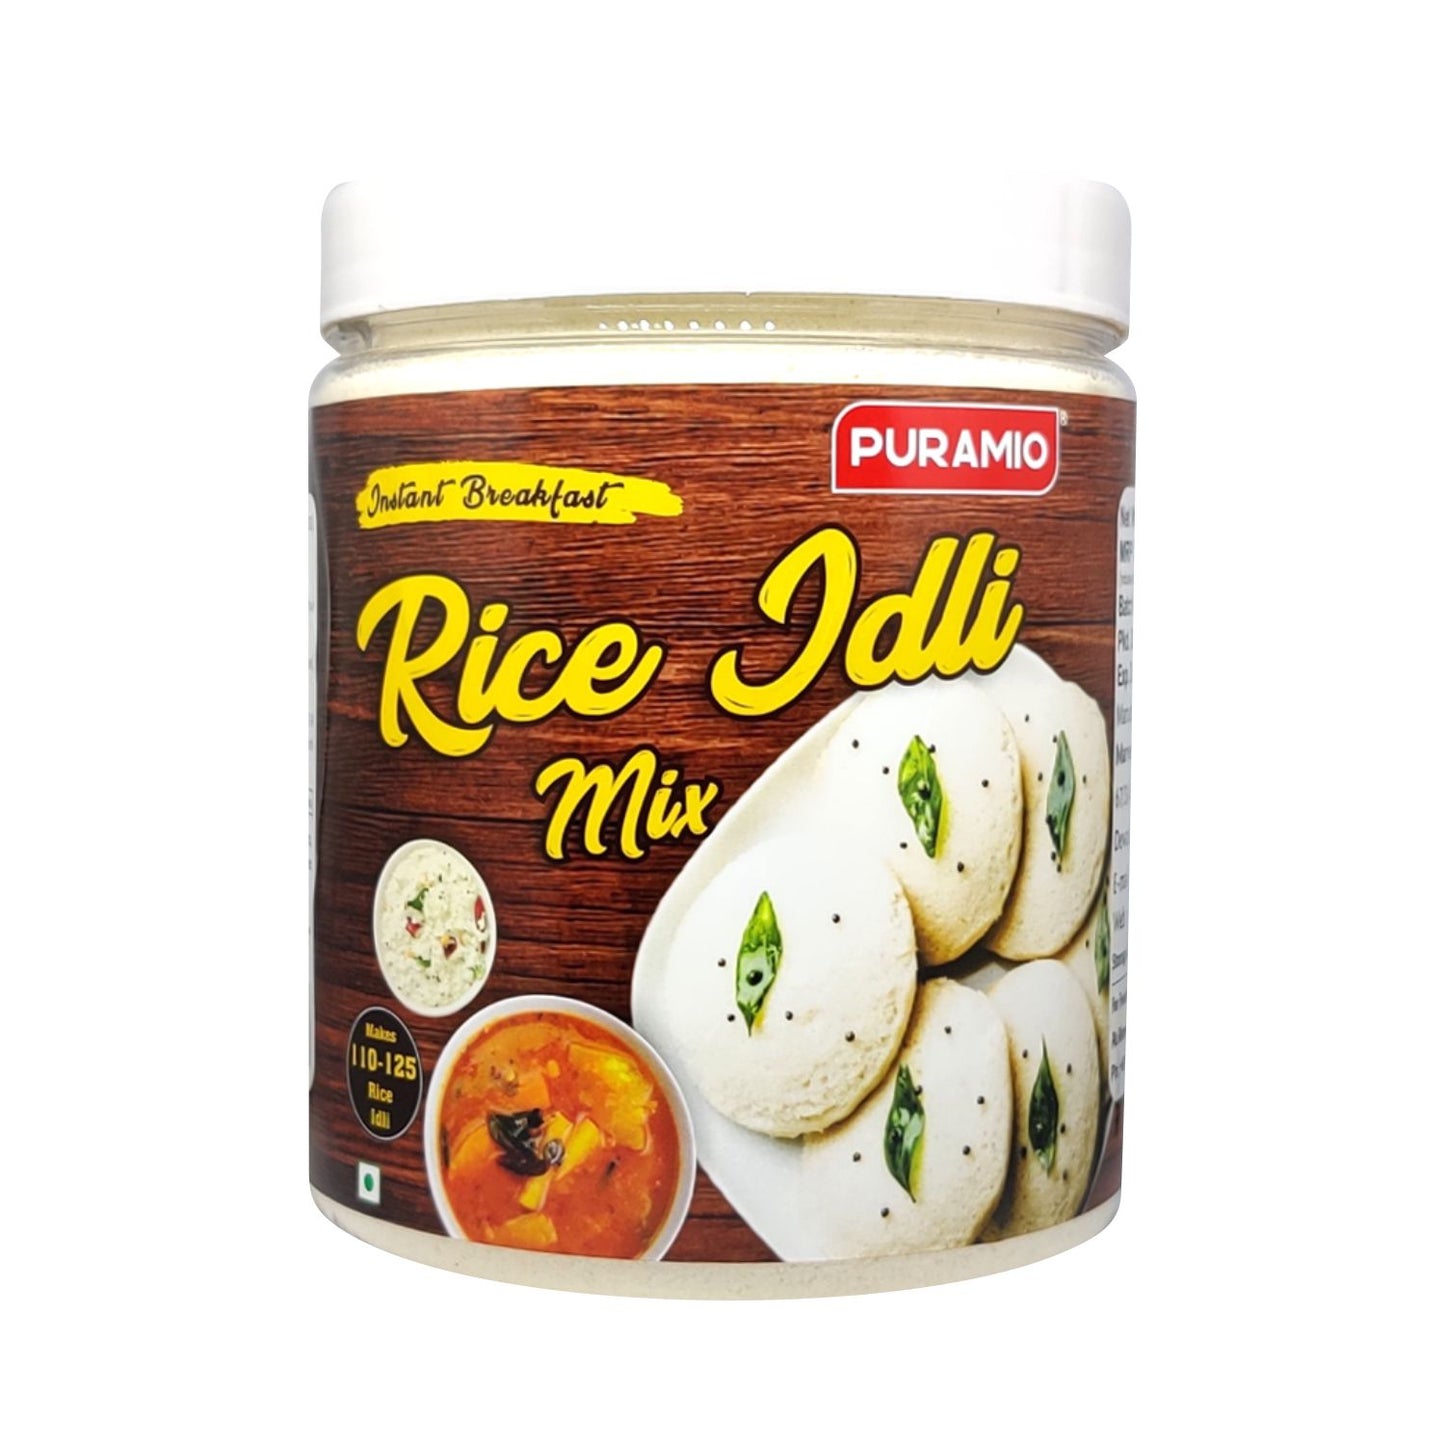 Puramio Instant Breakfast Rice Idli Mix